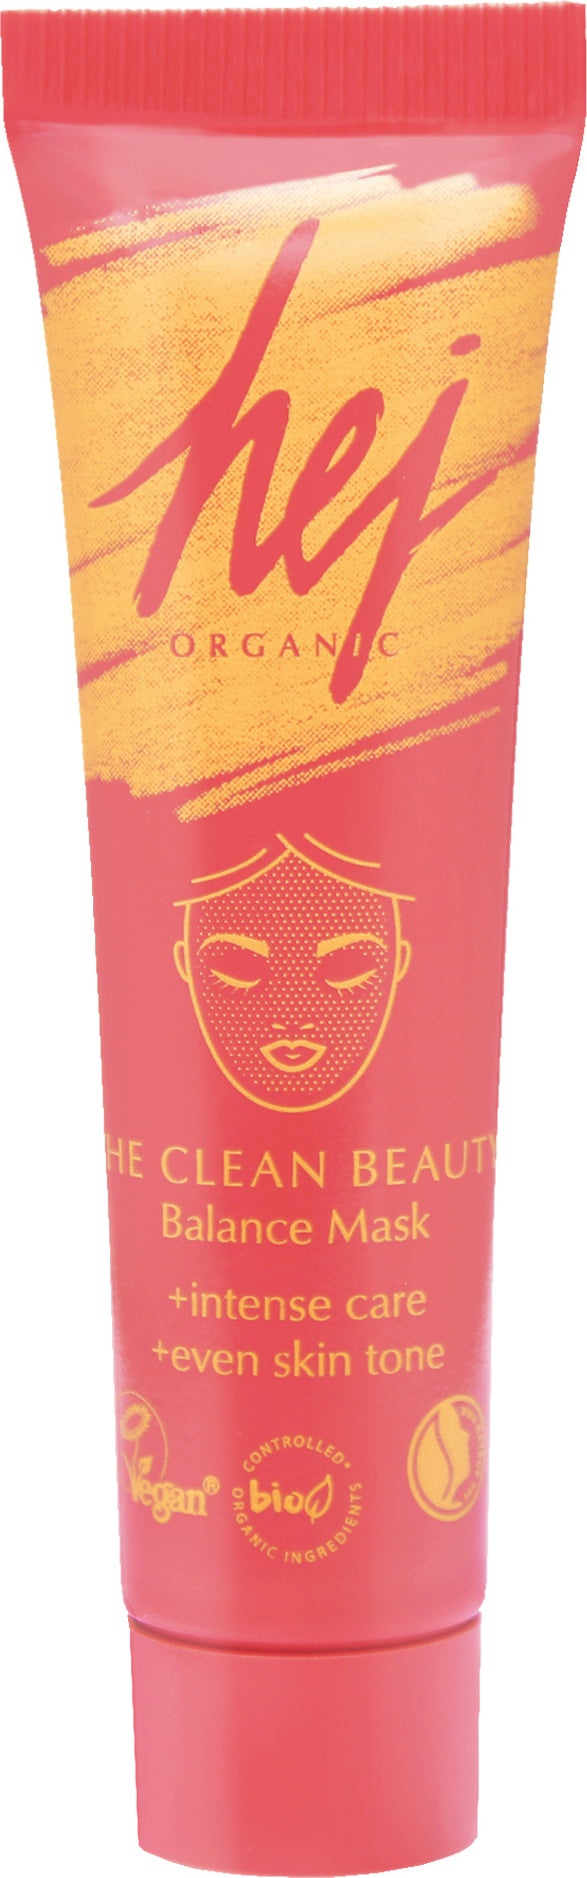 Hej organic The Clean Beauty Balance Mask